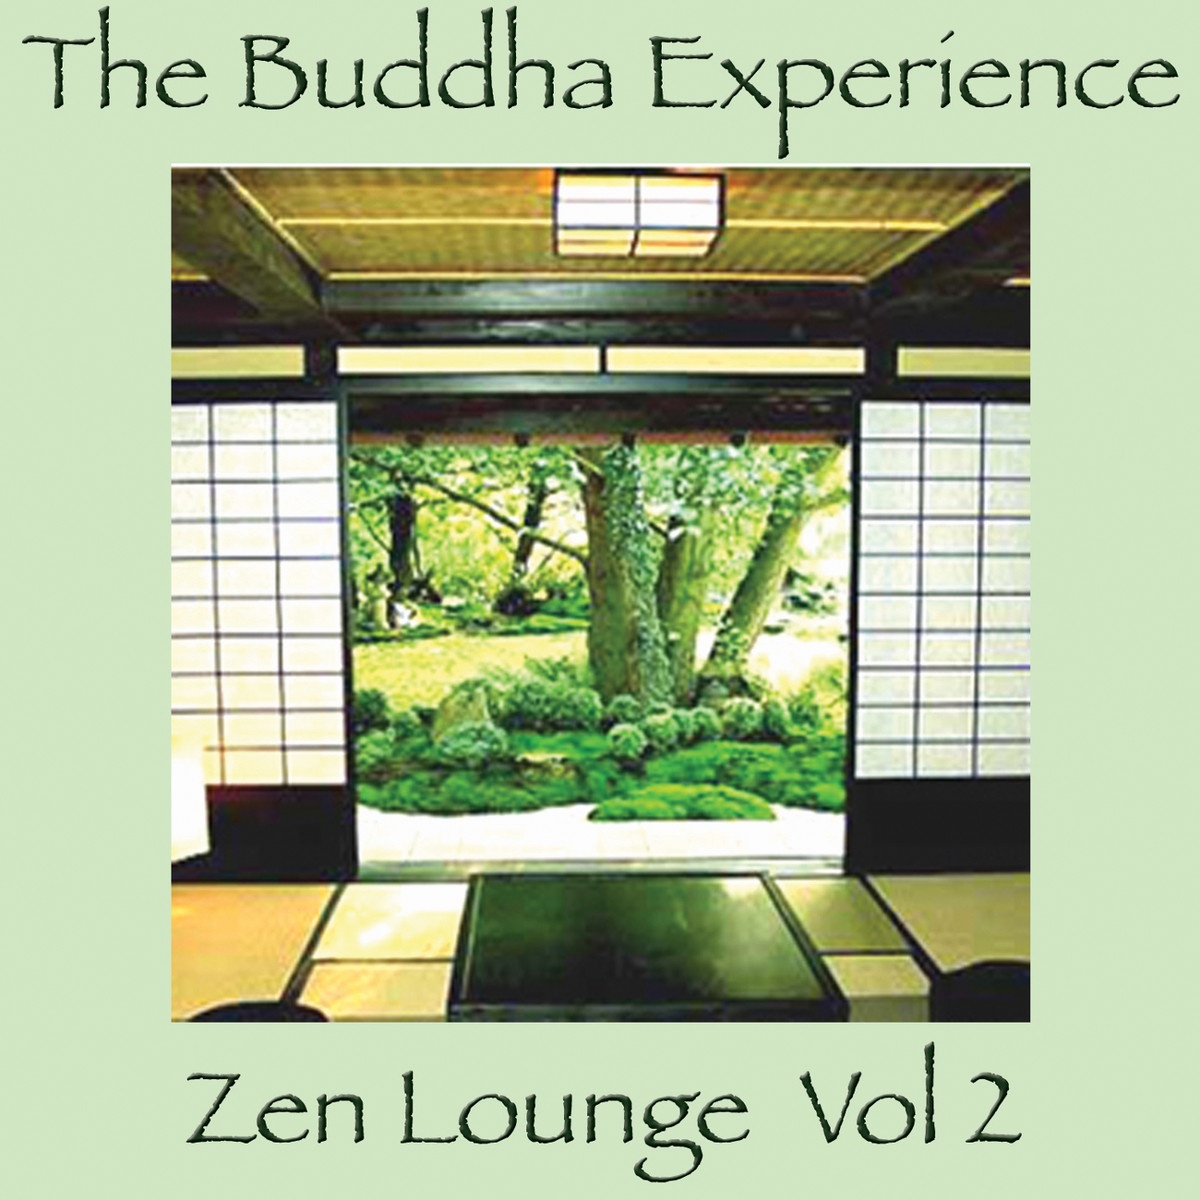 The Buddha Experience - Zen Lounge